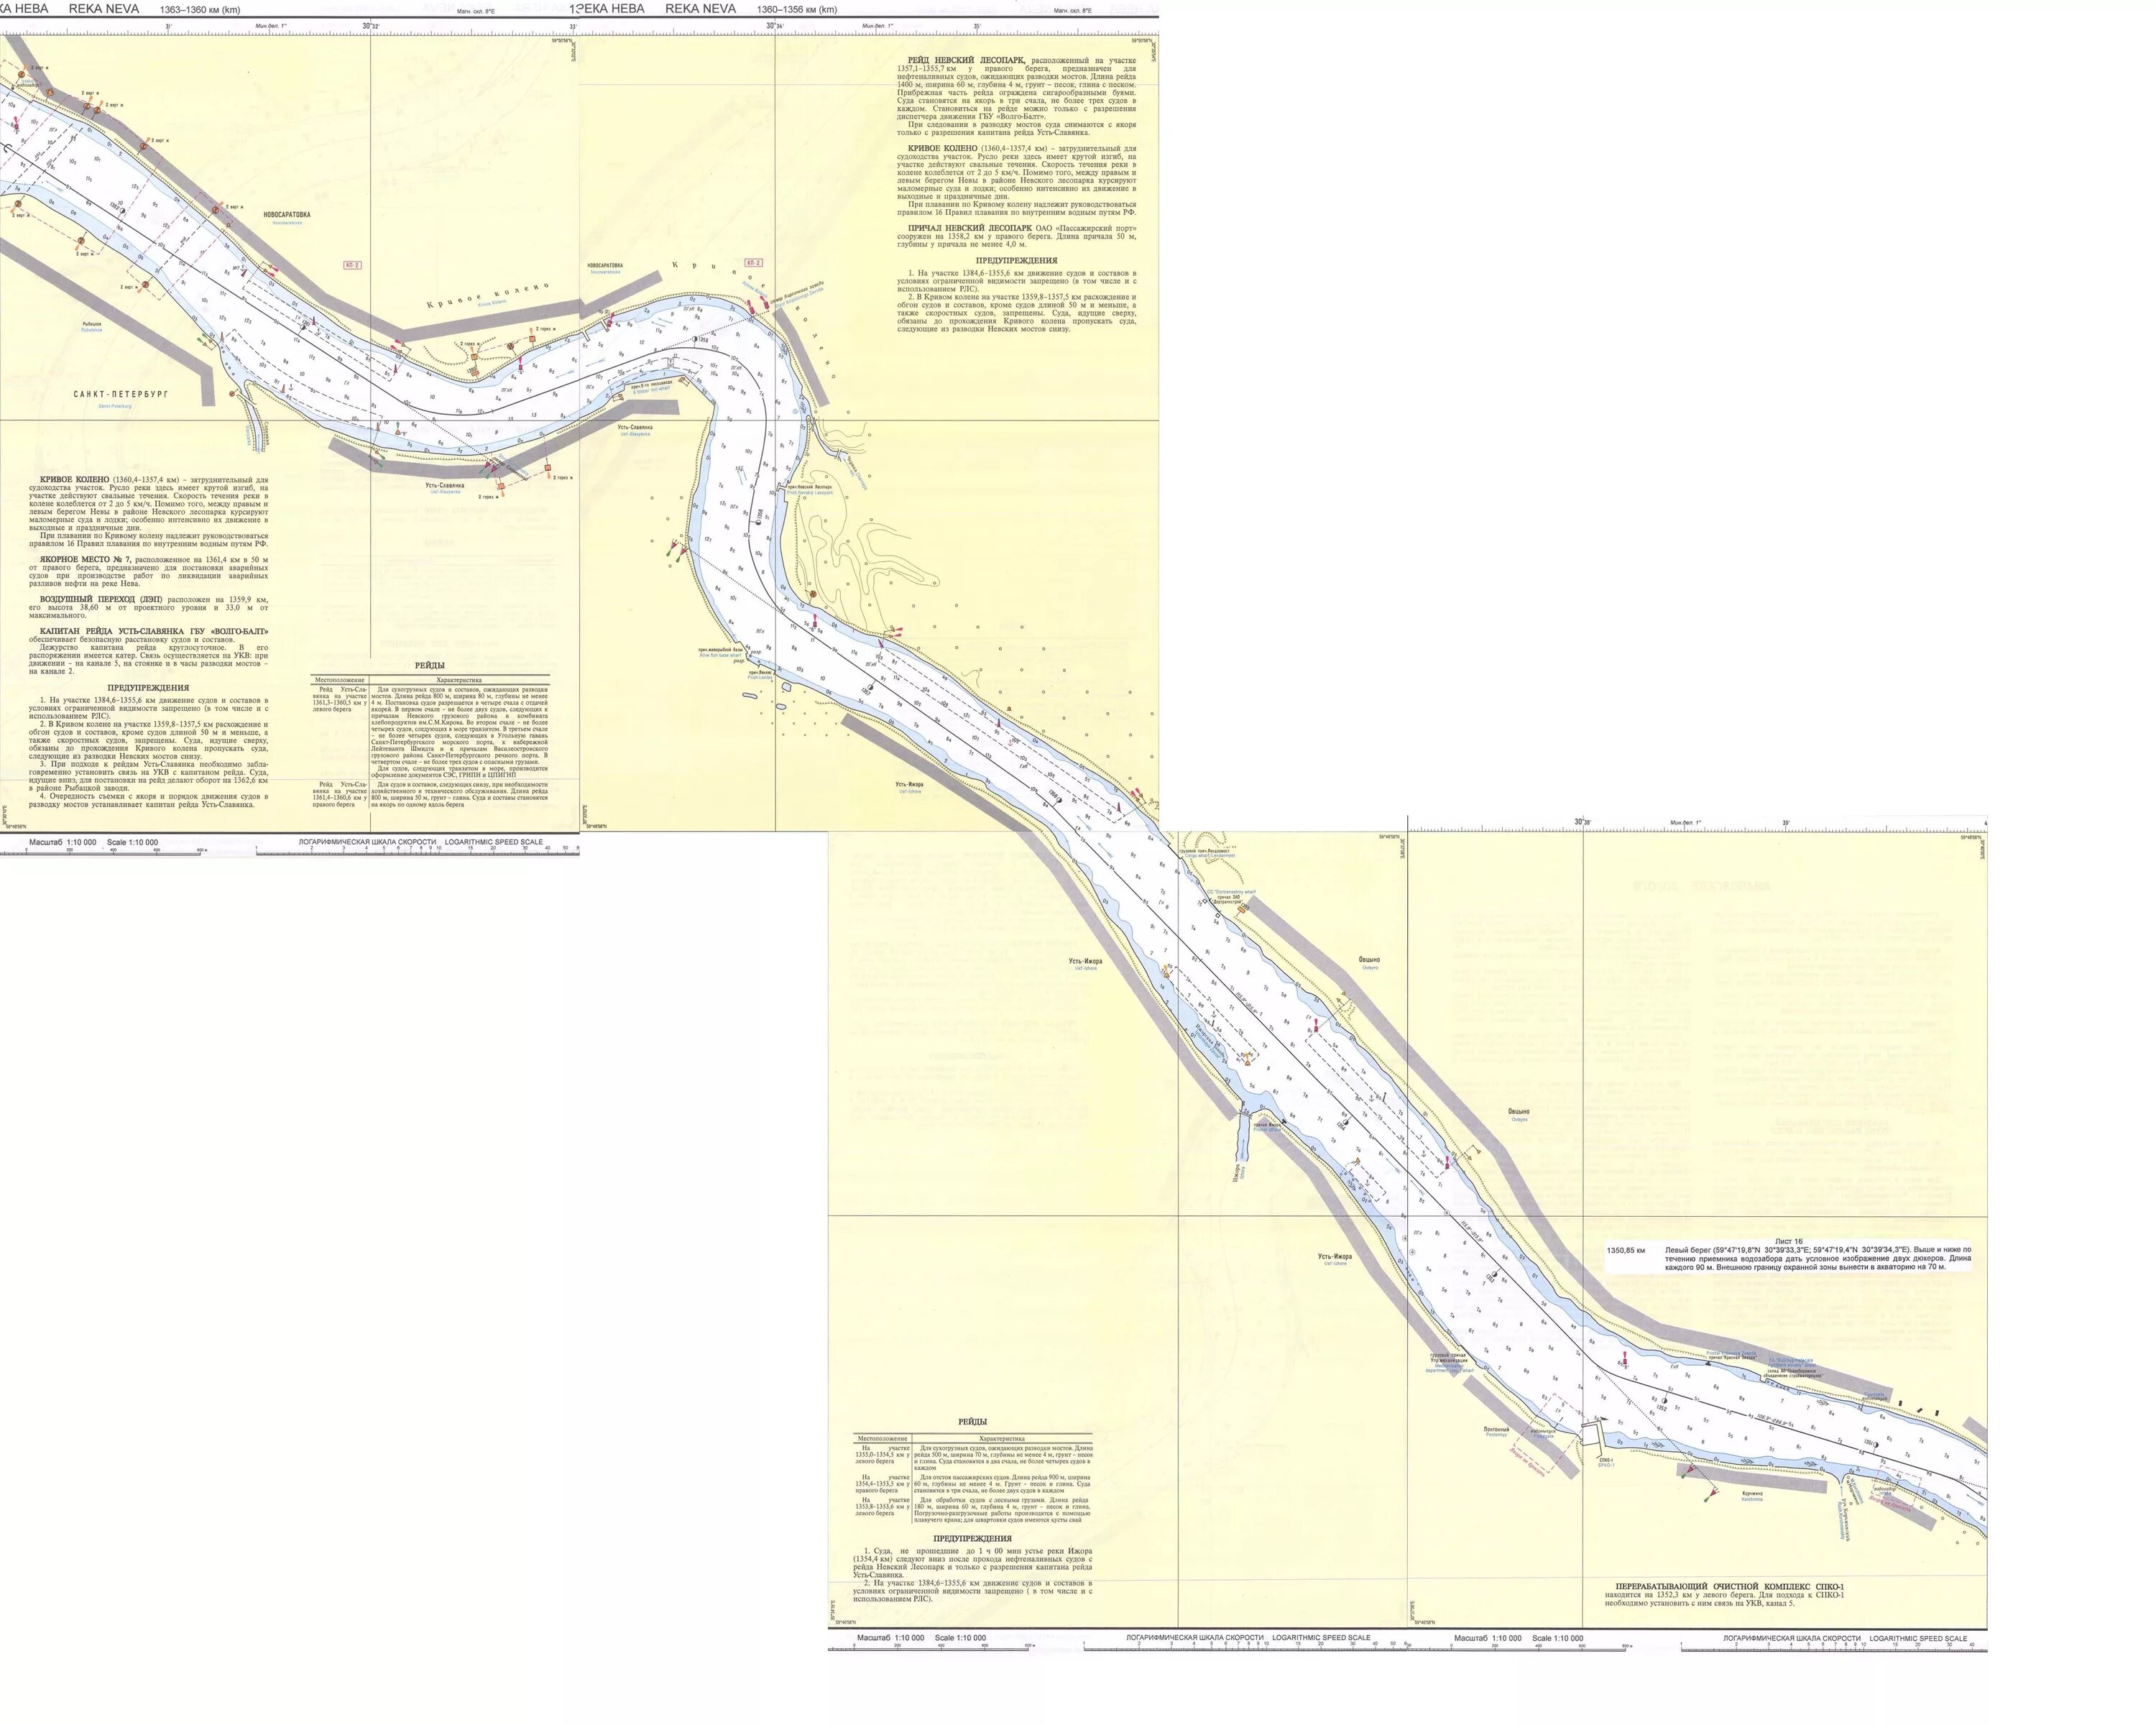 Показать карту реки невы. Карта глубин реки Нева. Навигационная карта река Нева. Лоция реки Нева. Лоцманская карта река Нива.